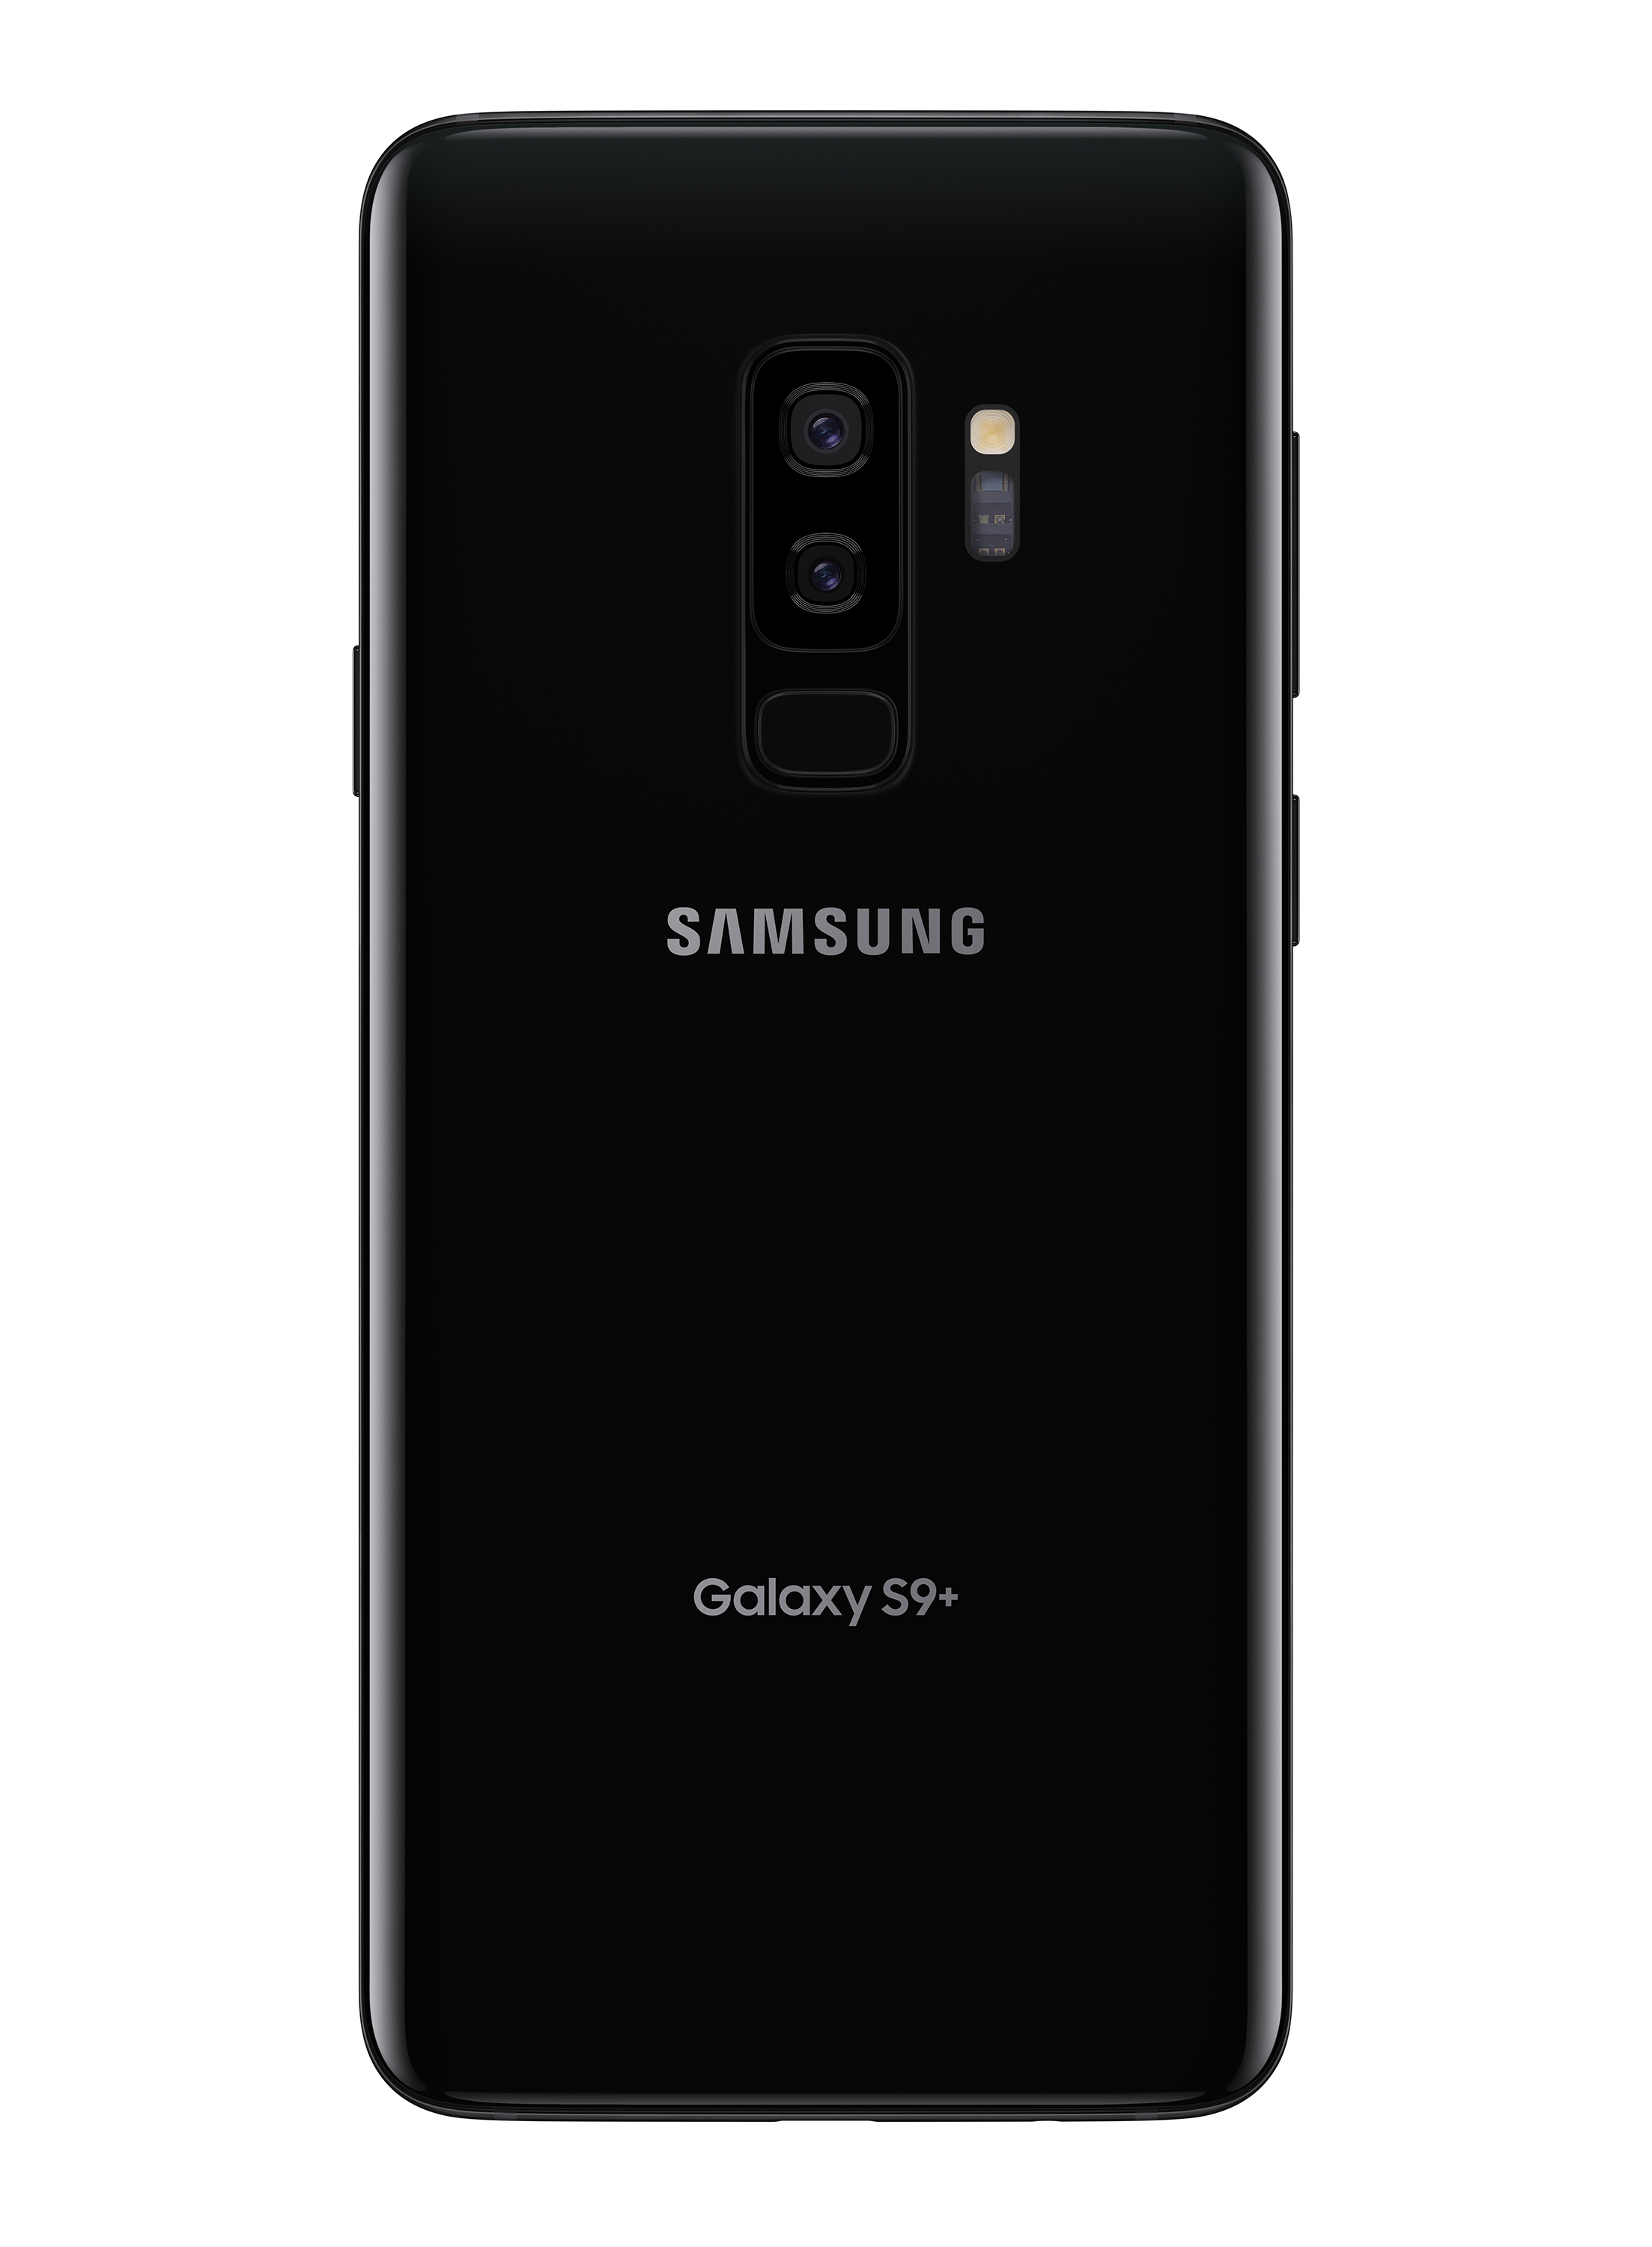 SAMSUNG Galaxy S9+ 64gb Unlocked Smartphone, Black - image 3 of 5